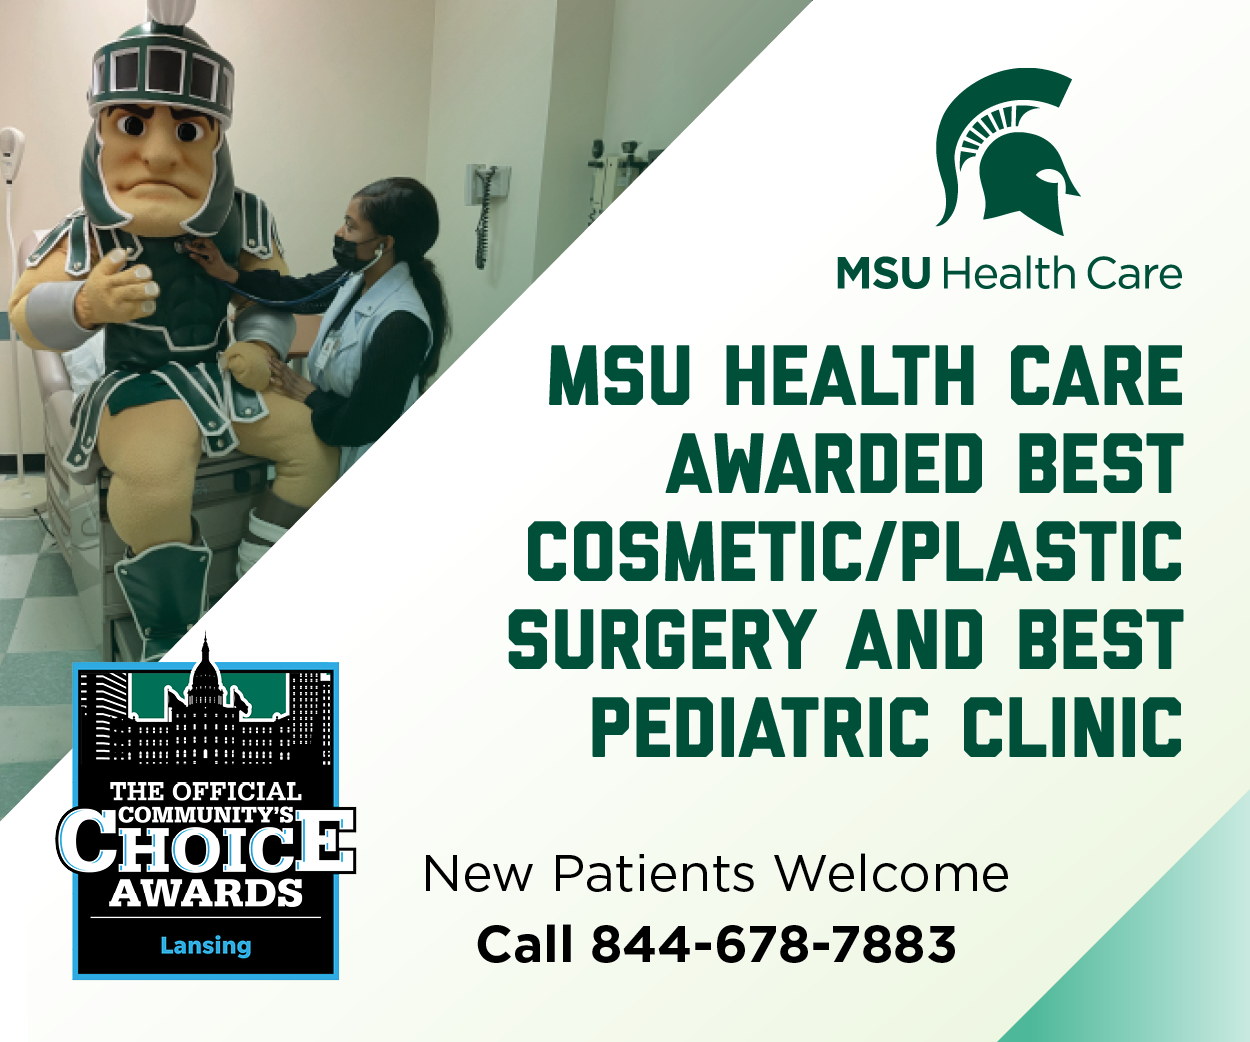 MSU Health Care Pediatrics and MSU Health Care Plastic and Reconstructive Surgery awarded Best Pediatric Clinic and Best Cosmetic/Plastic Surgery.